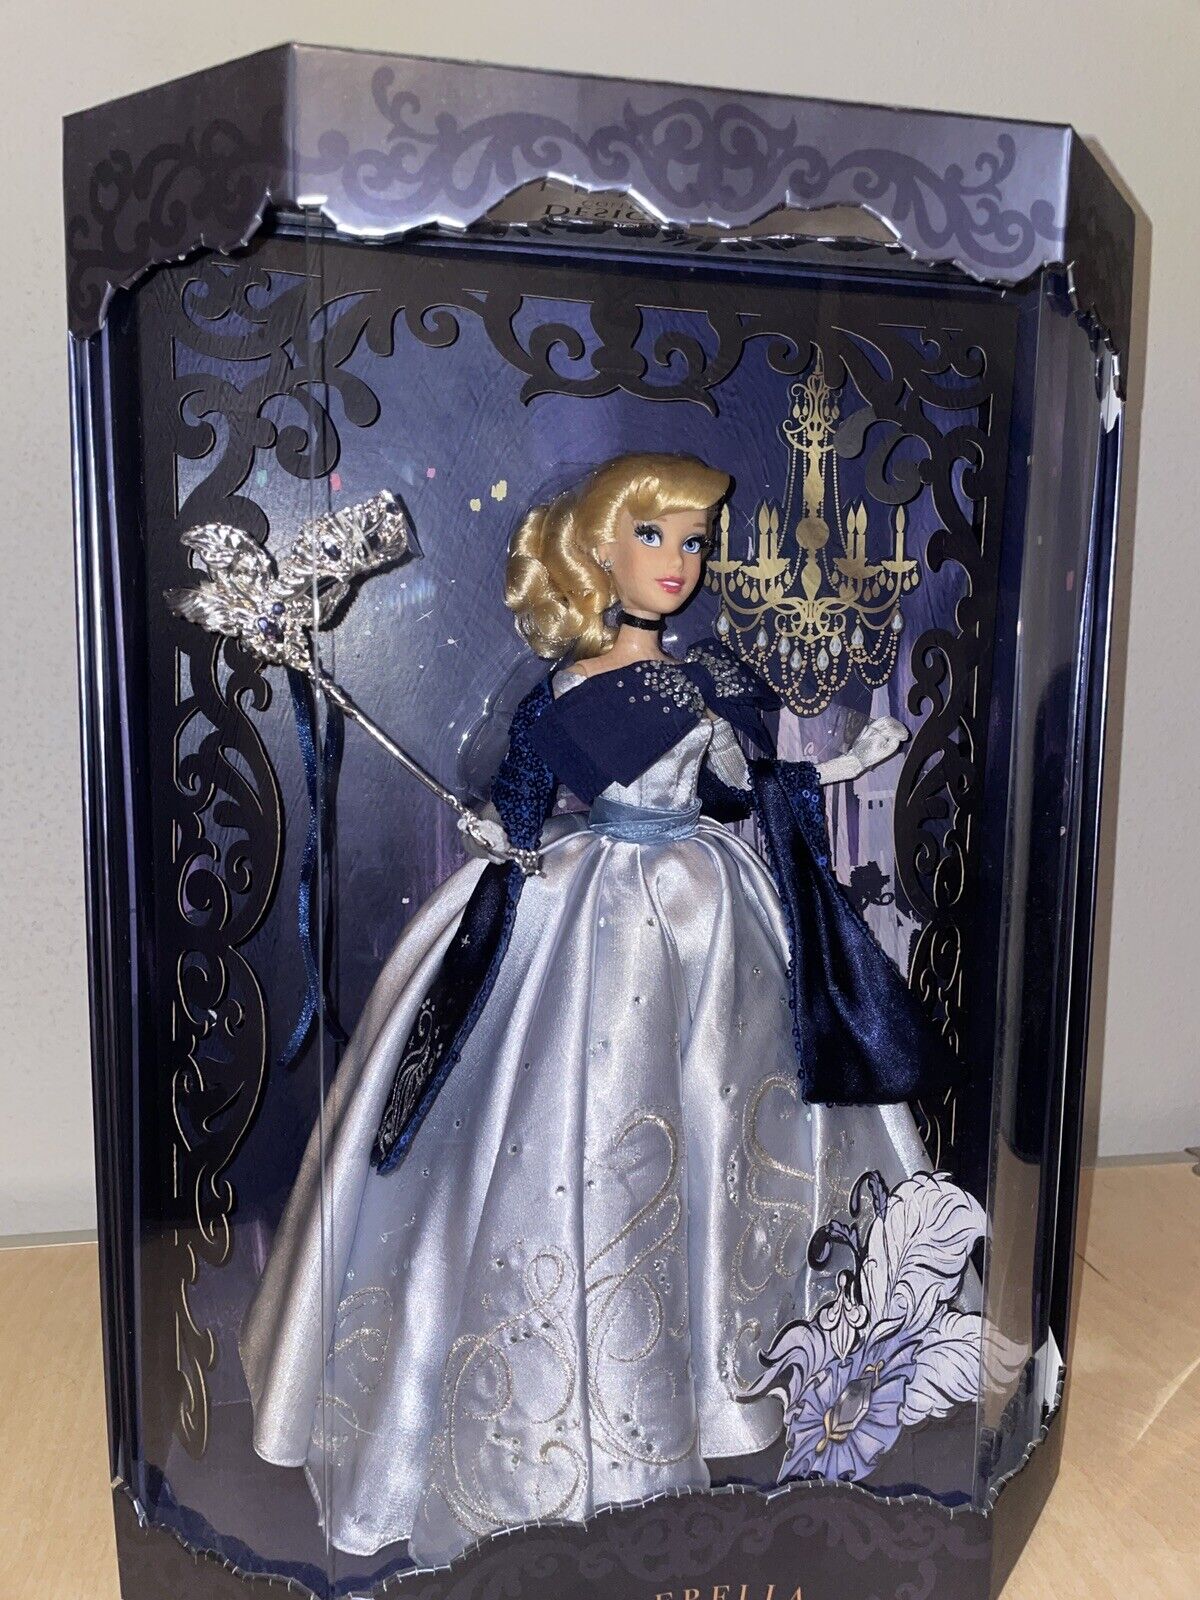 Cinderella Midnight Masquerade Disney Designer Doll Limited Edition Collector